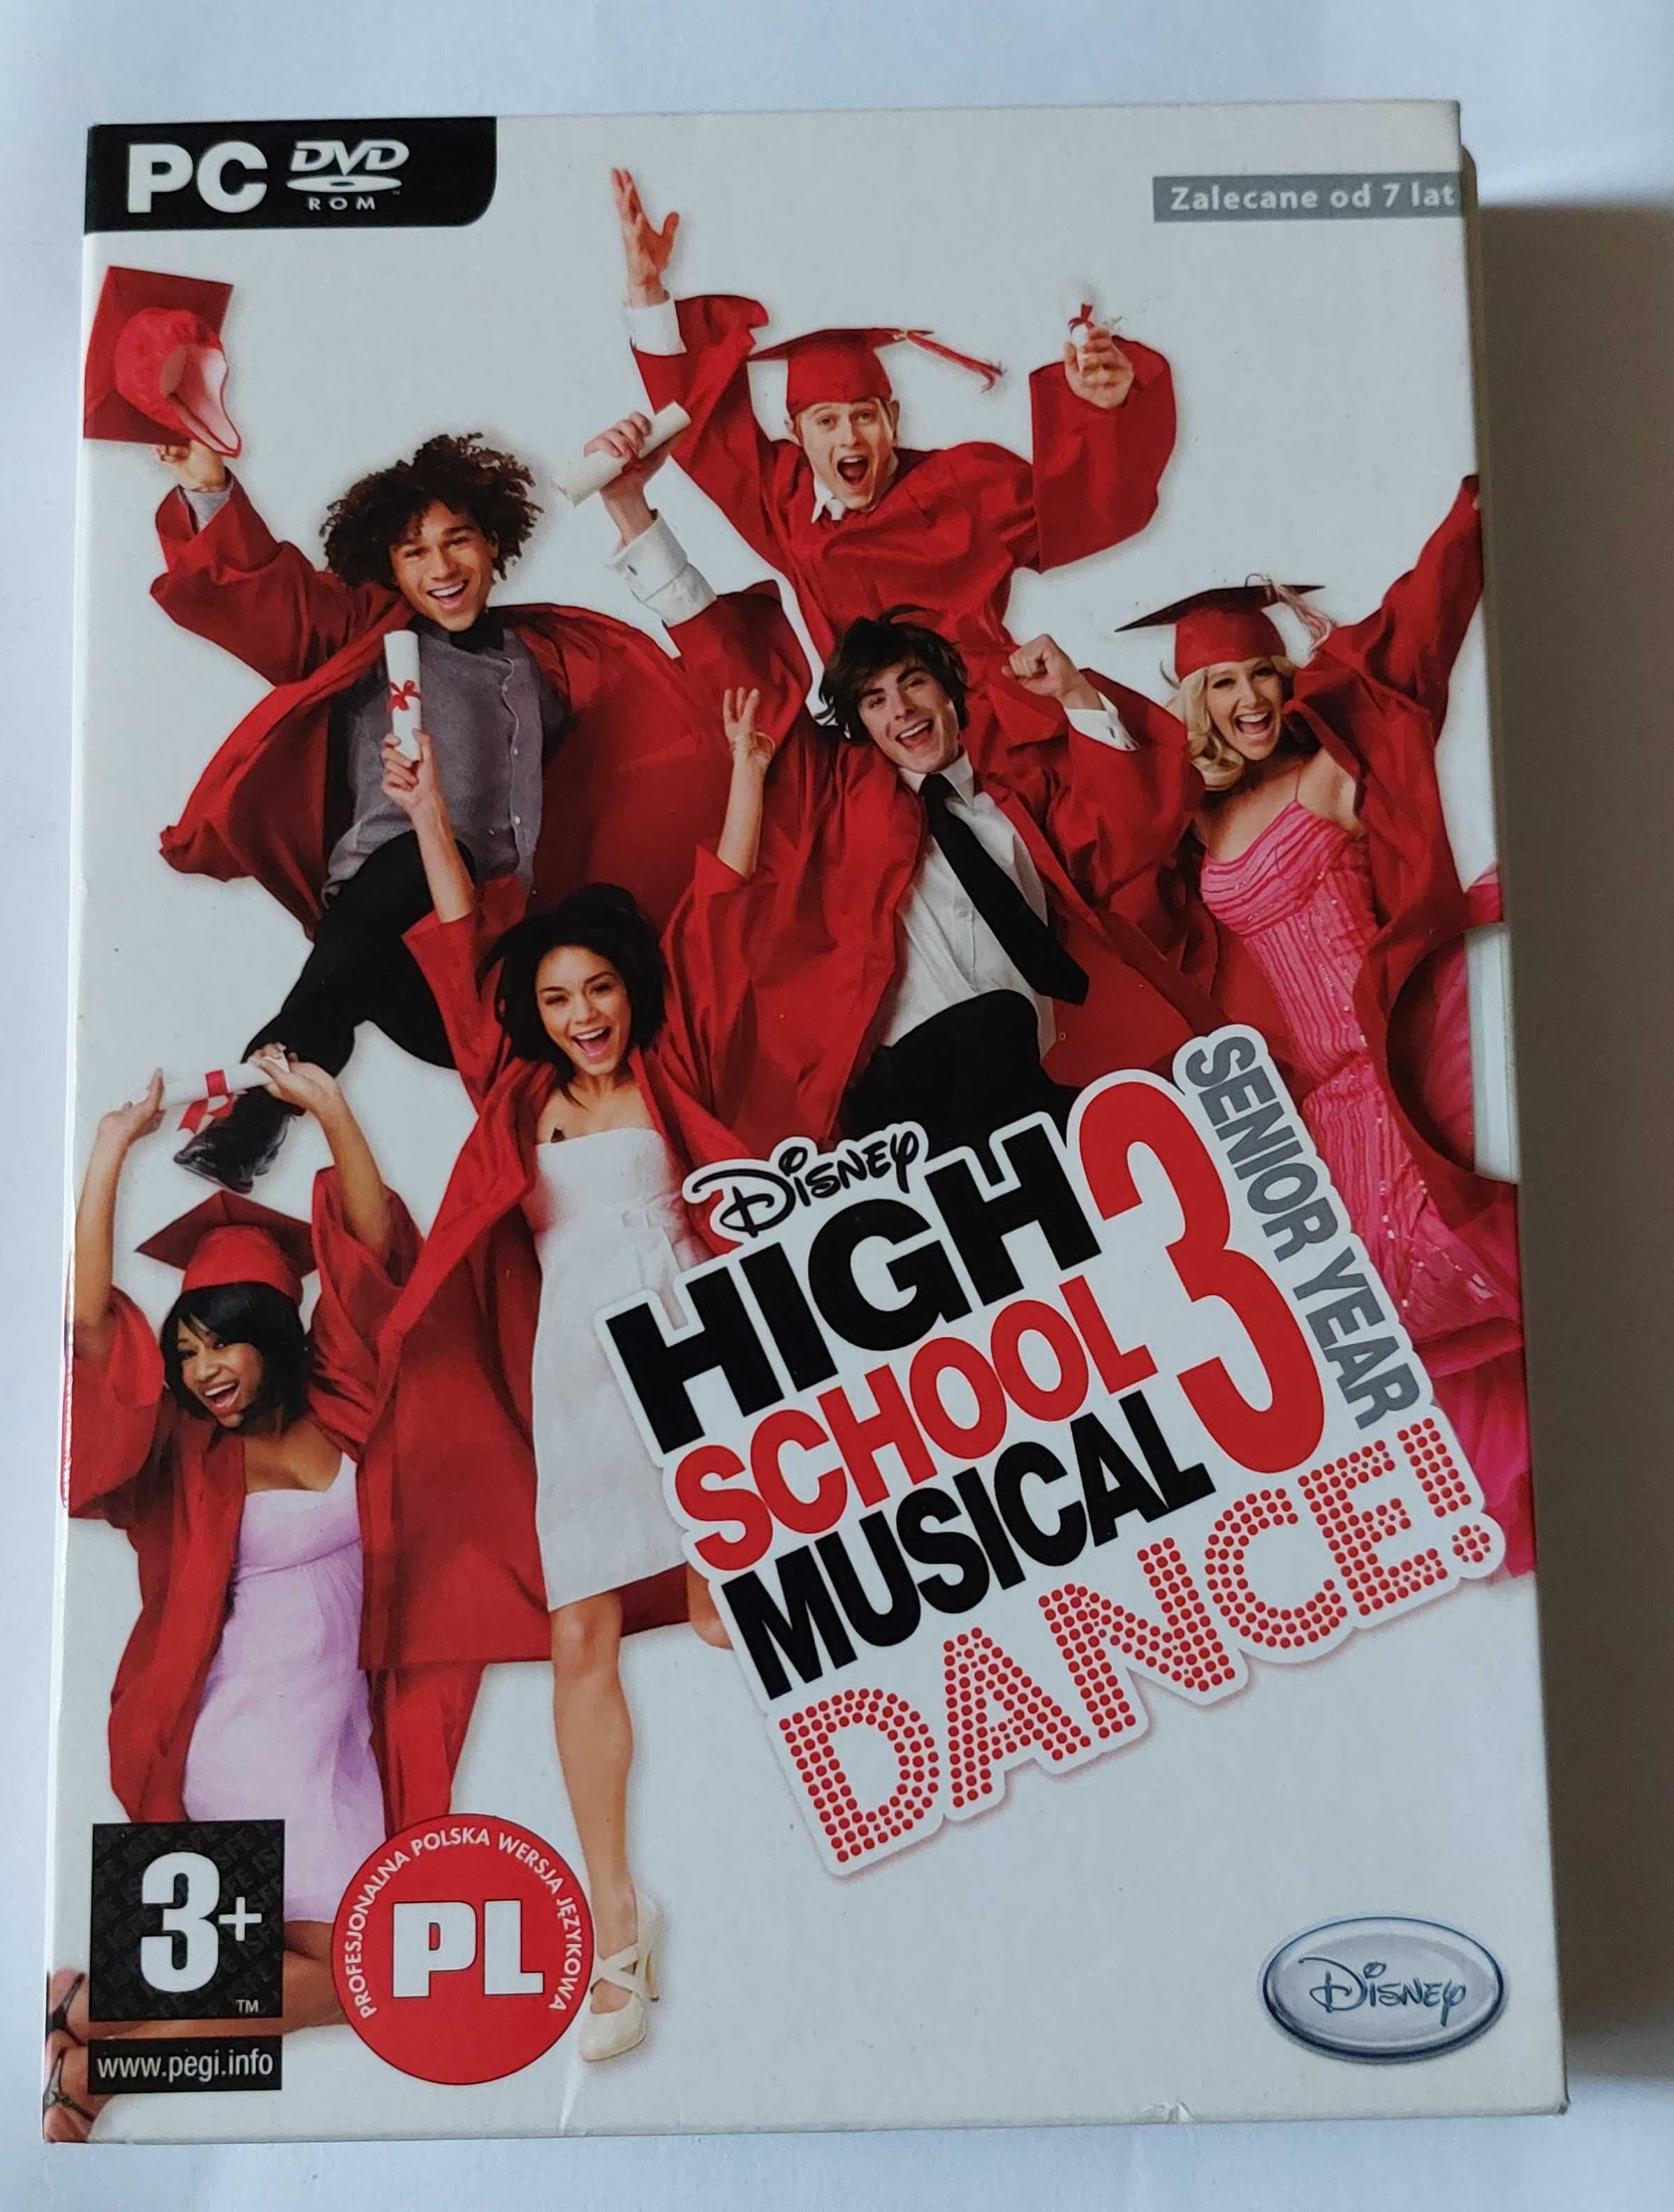 DISNEY sing in High School Musical 3 | gra muzyczna po polsku na PC